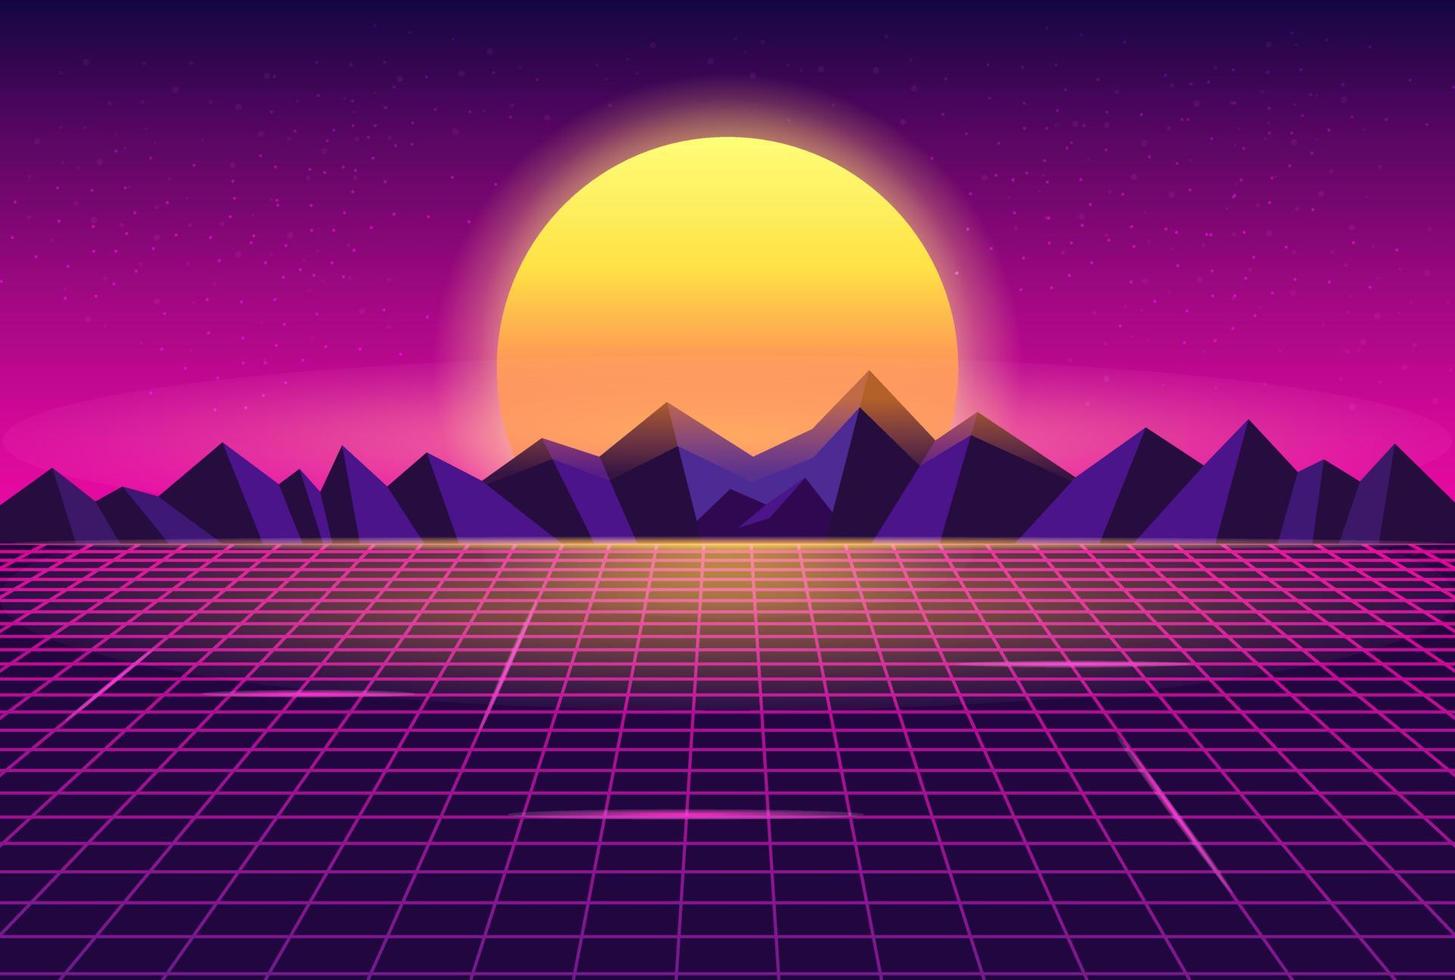 Synthwave Retrowave Sun Illuminated Glowing Mountains Wireframe Landscape Illustration Background vector